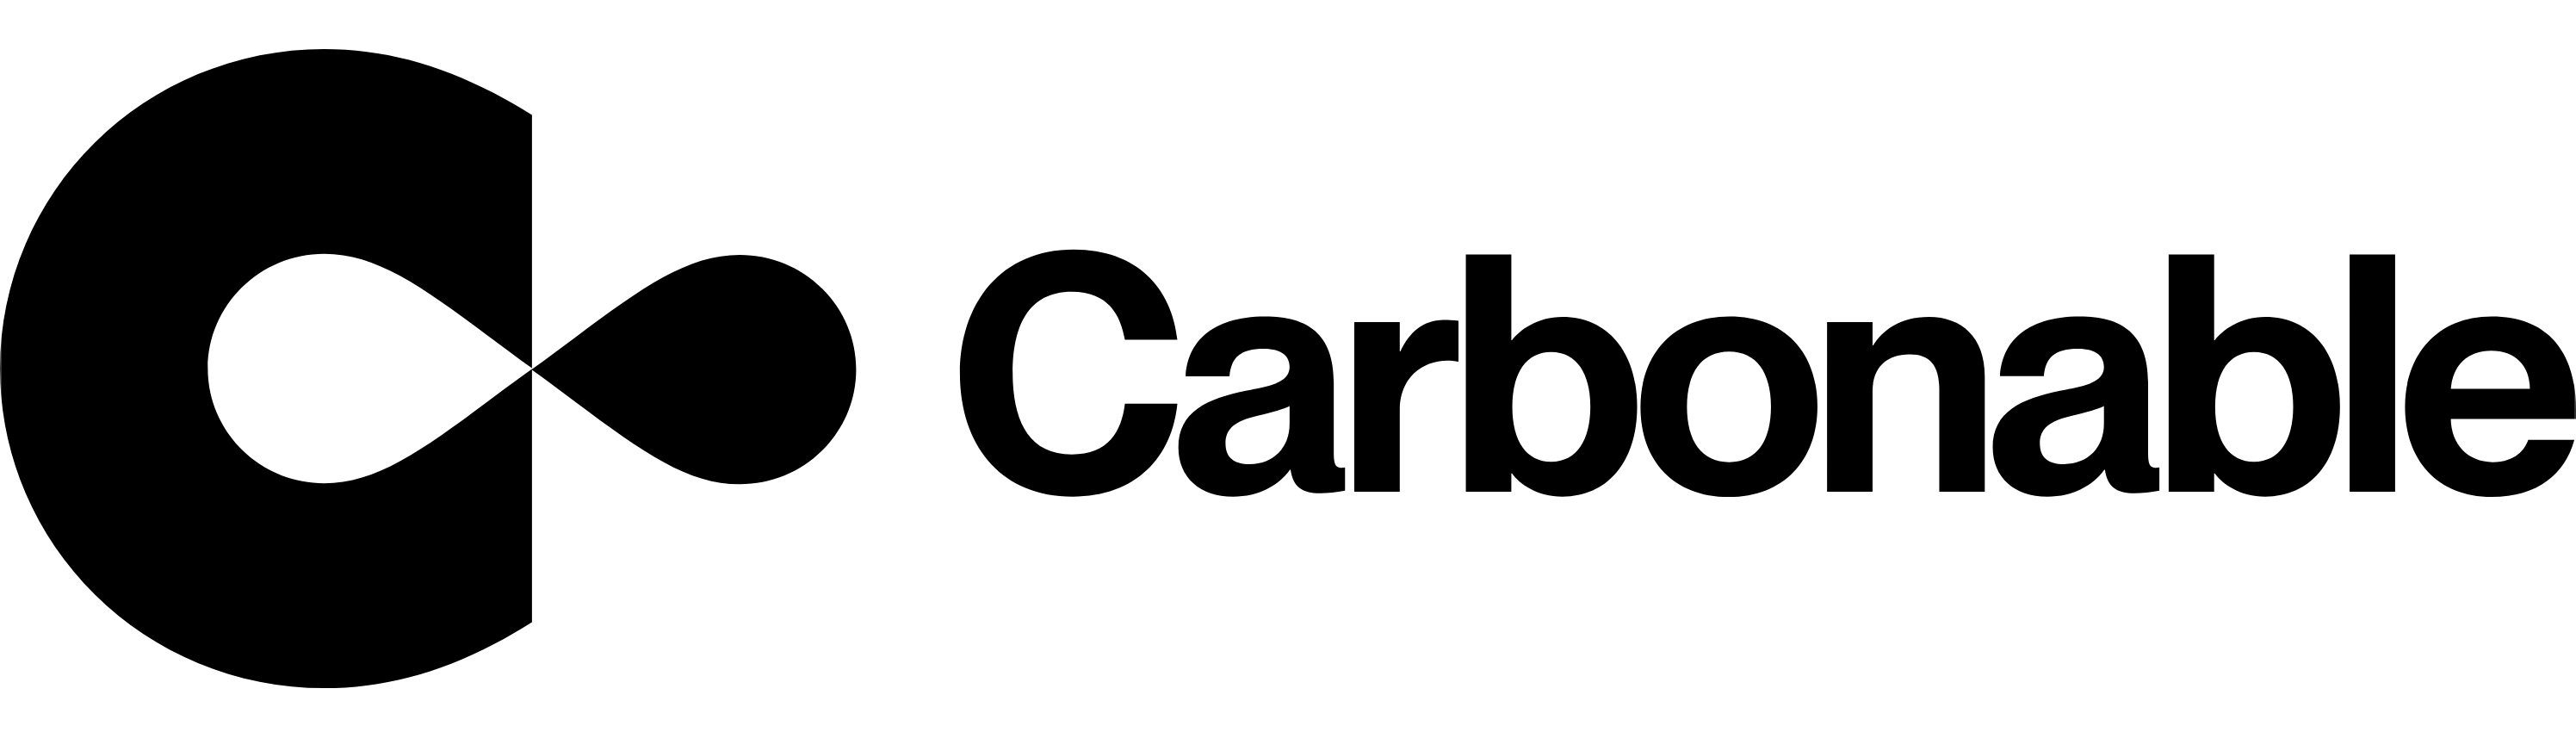 Carbonable logo Blank Meme Template